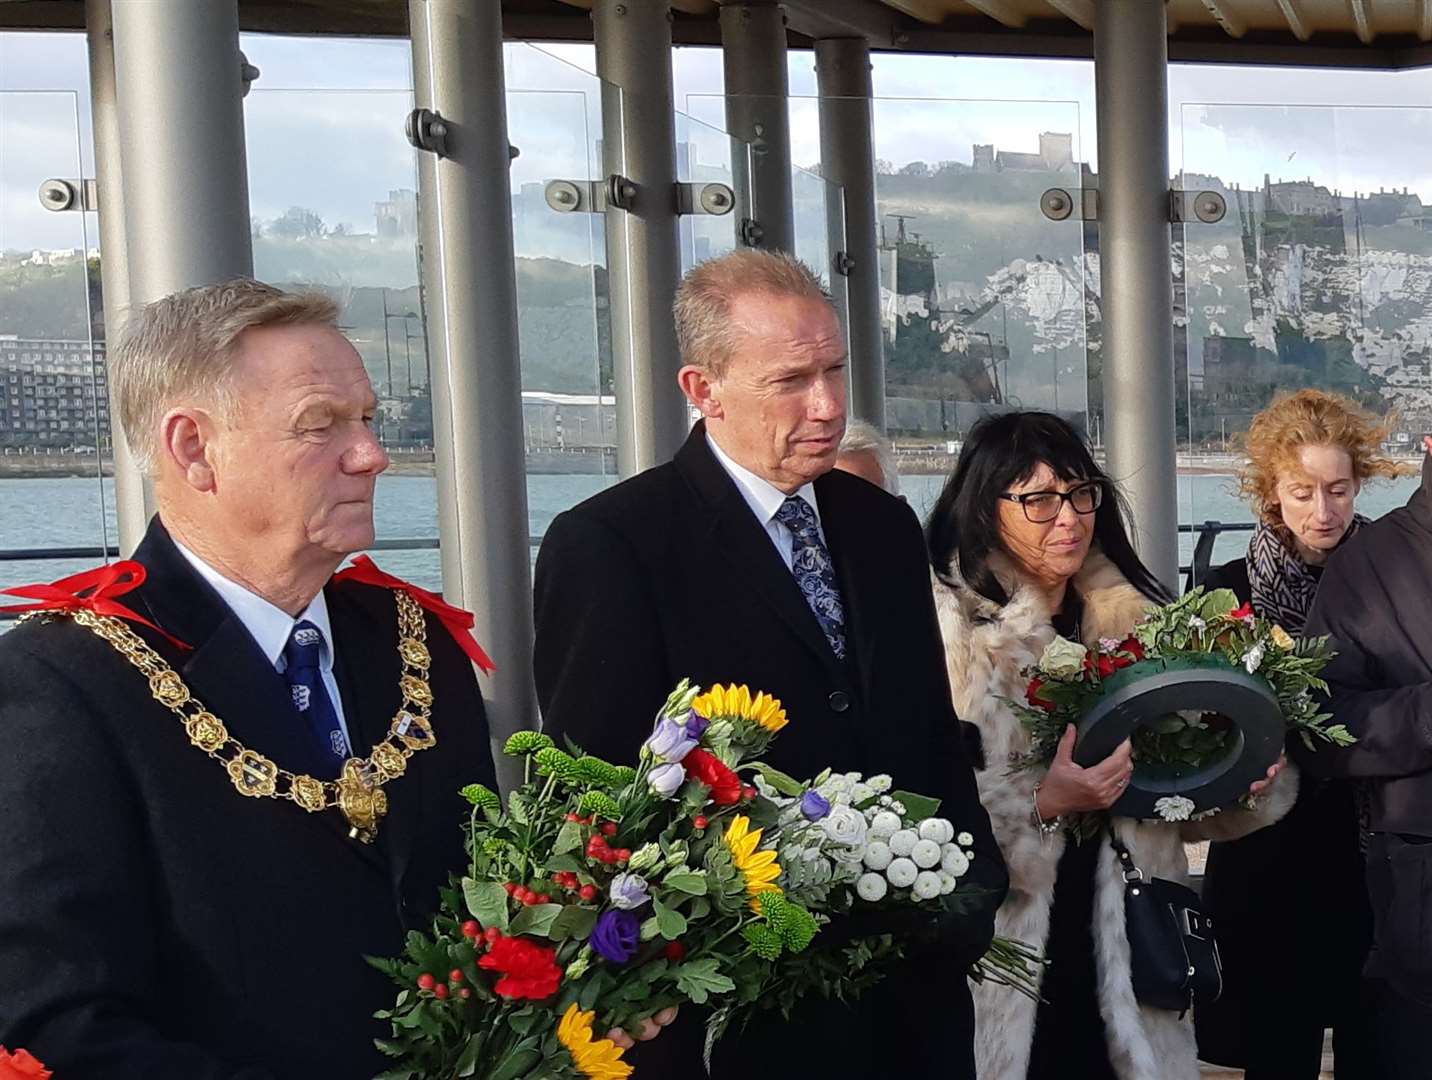 Mayor Gordon Cowan and council leader Trevor Barlett at the pier prayers. Picture: Sam Lennon KMG